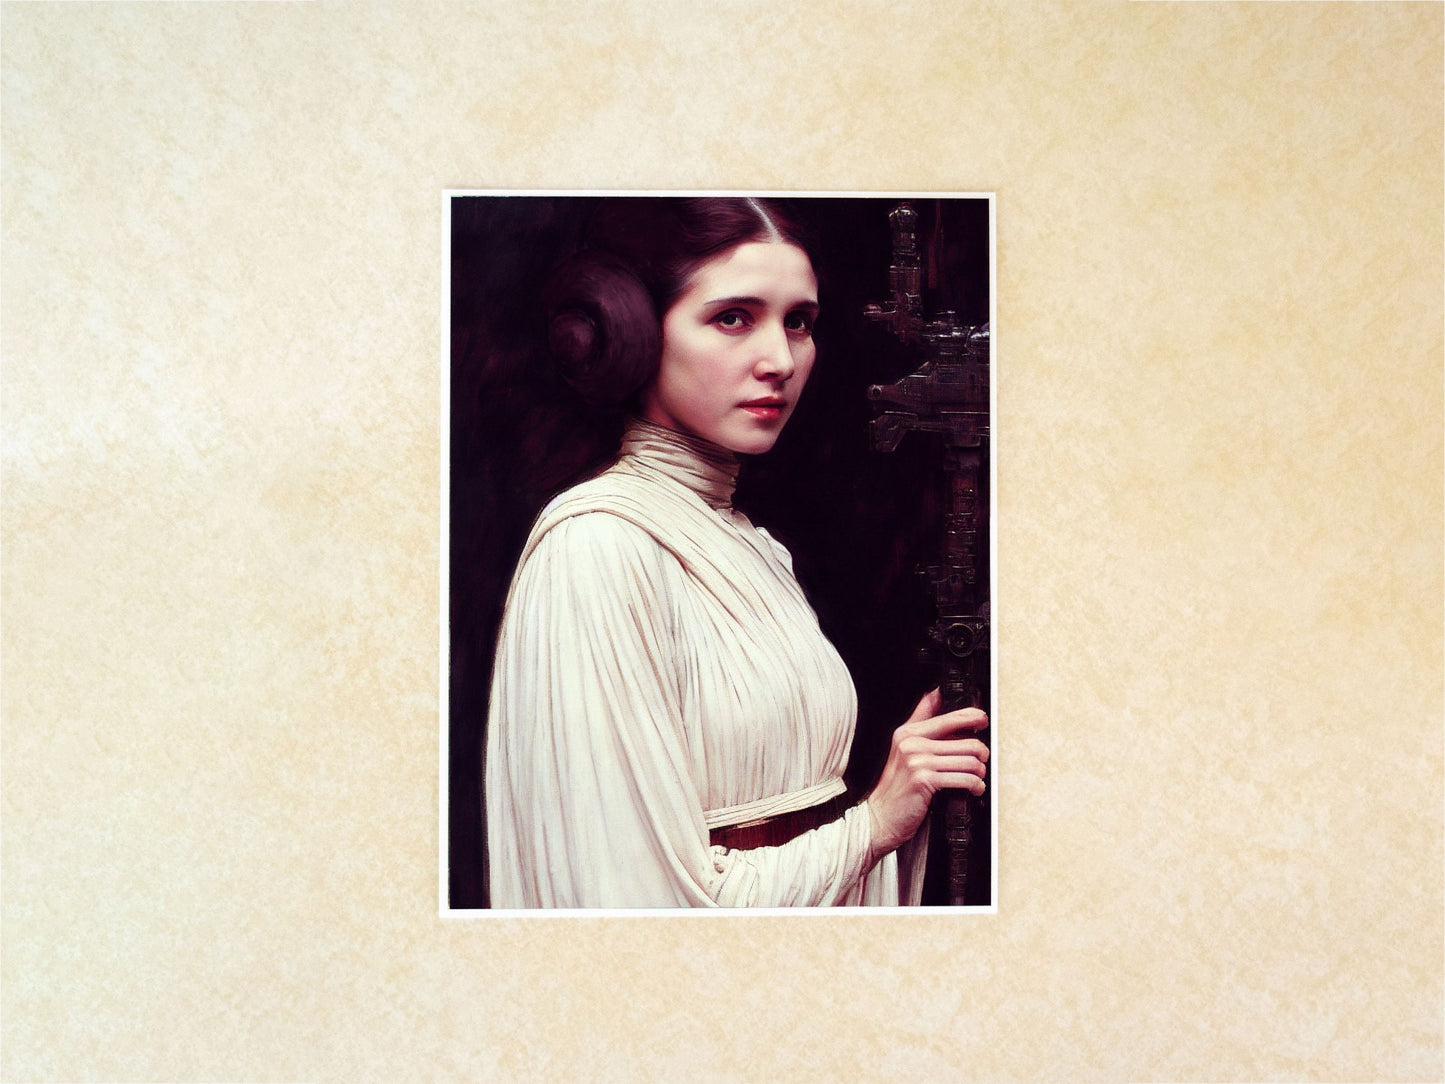 Portrait of Princess Leia Organa of Alderaan